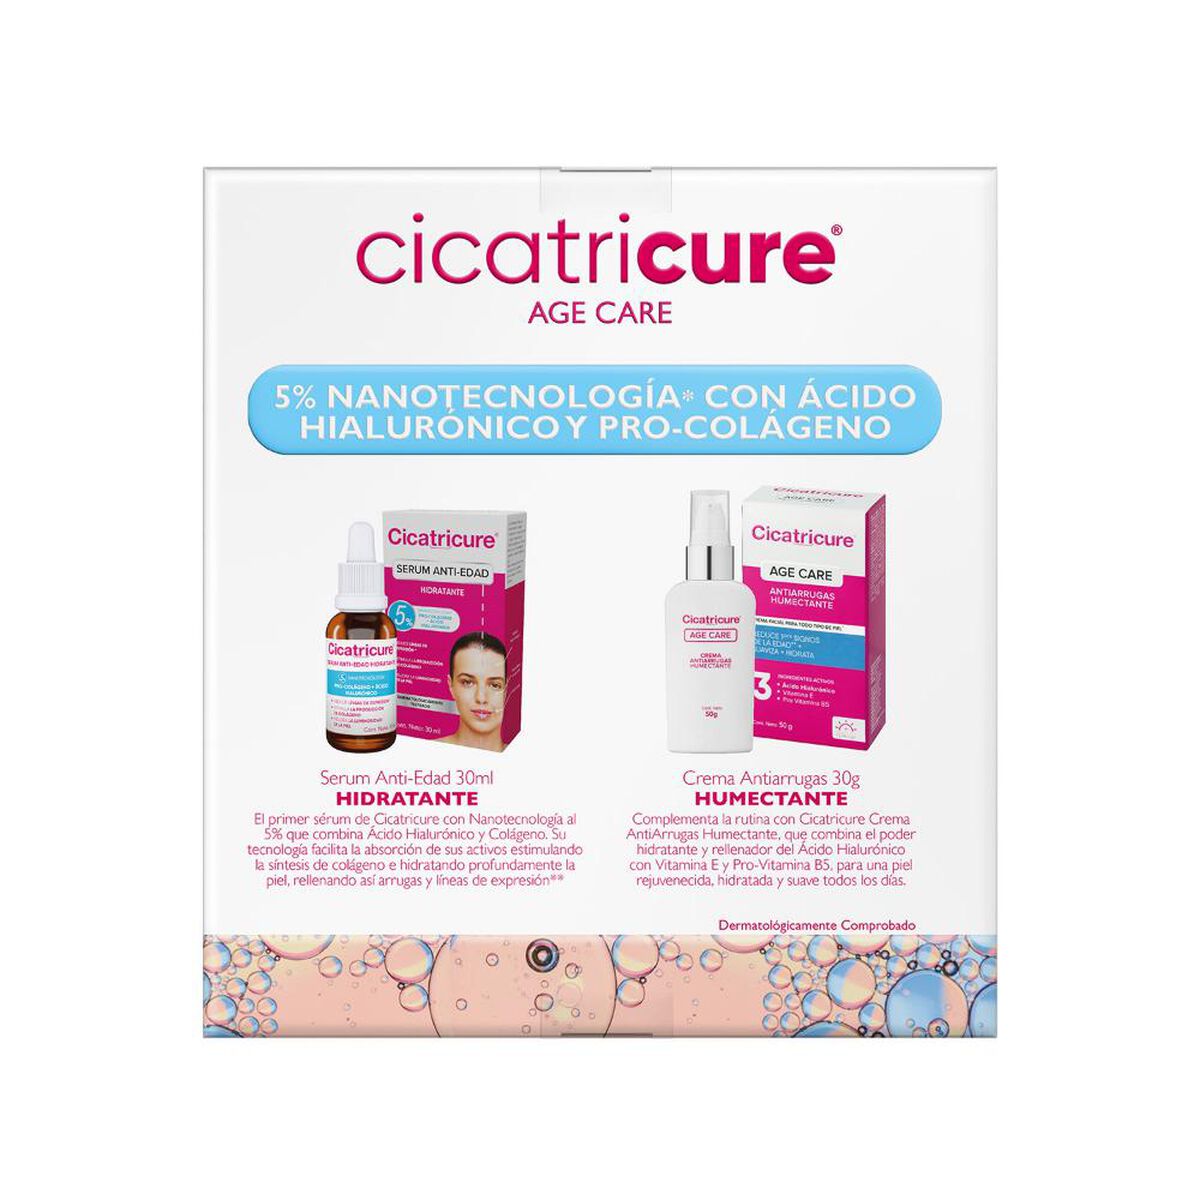 Pack Serum Hidratante 30Ml + Age Care Crema Humectante 50Gr Cicatricure